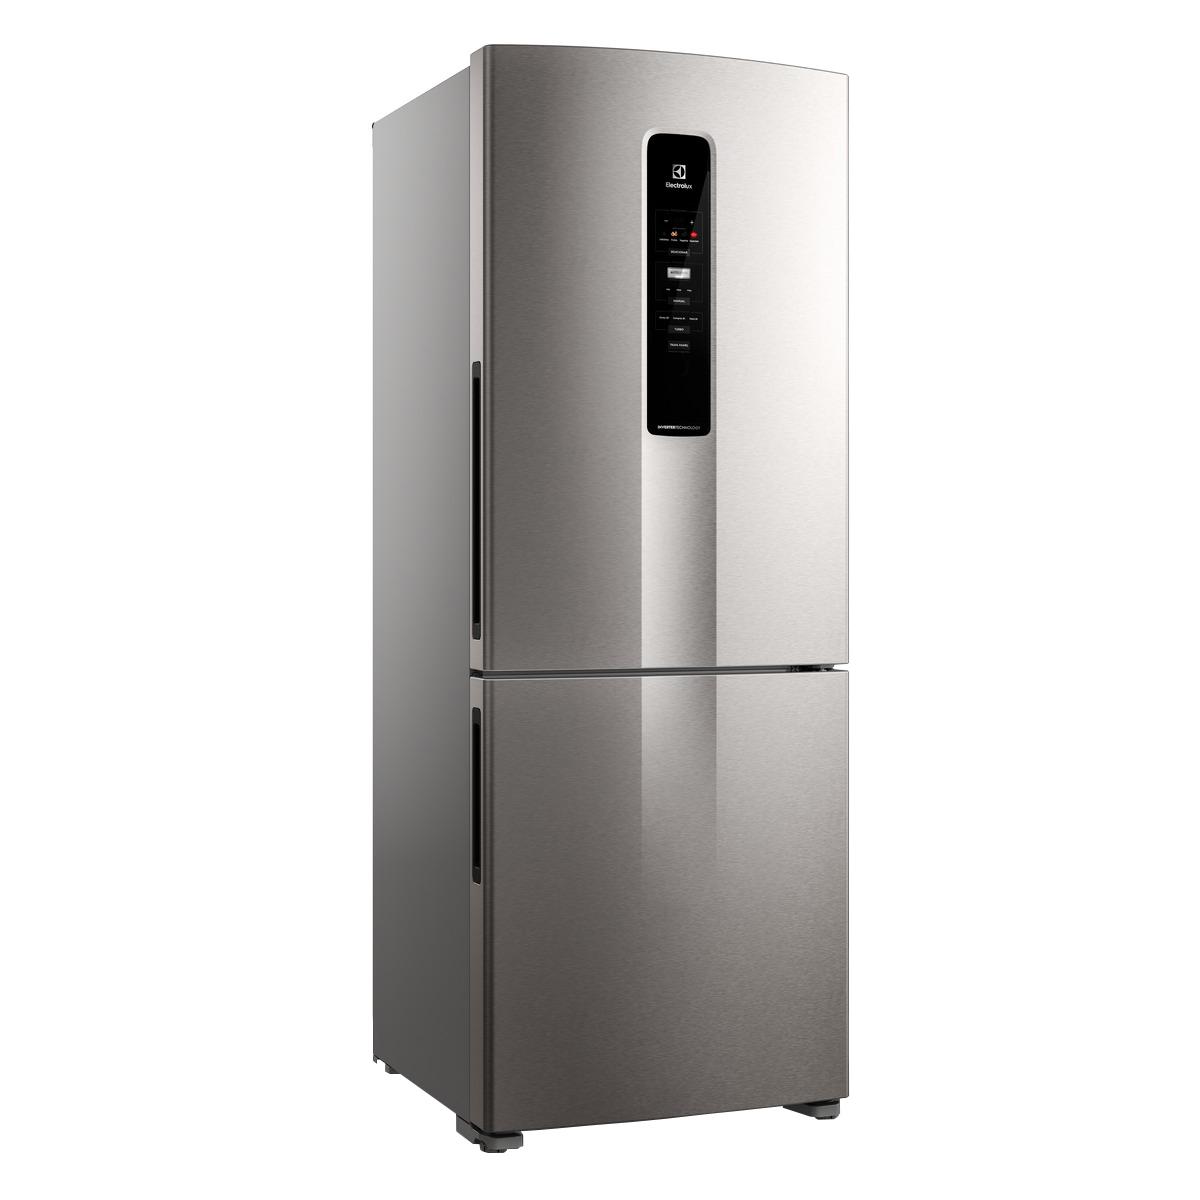 Geladeira Refrigerador Electrolux 490L Frost Free Bottom Freezer Duplex Ib7s - Inox - Inox - 110 Volts